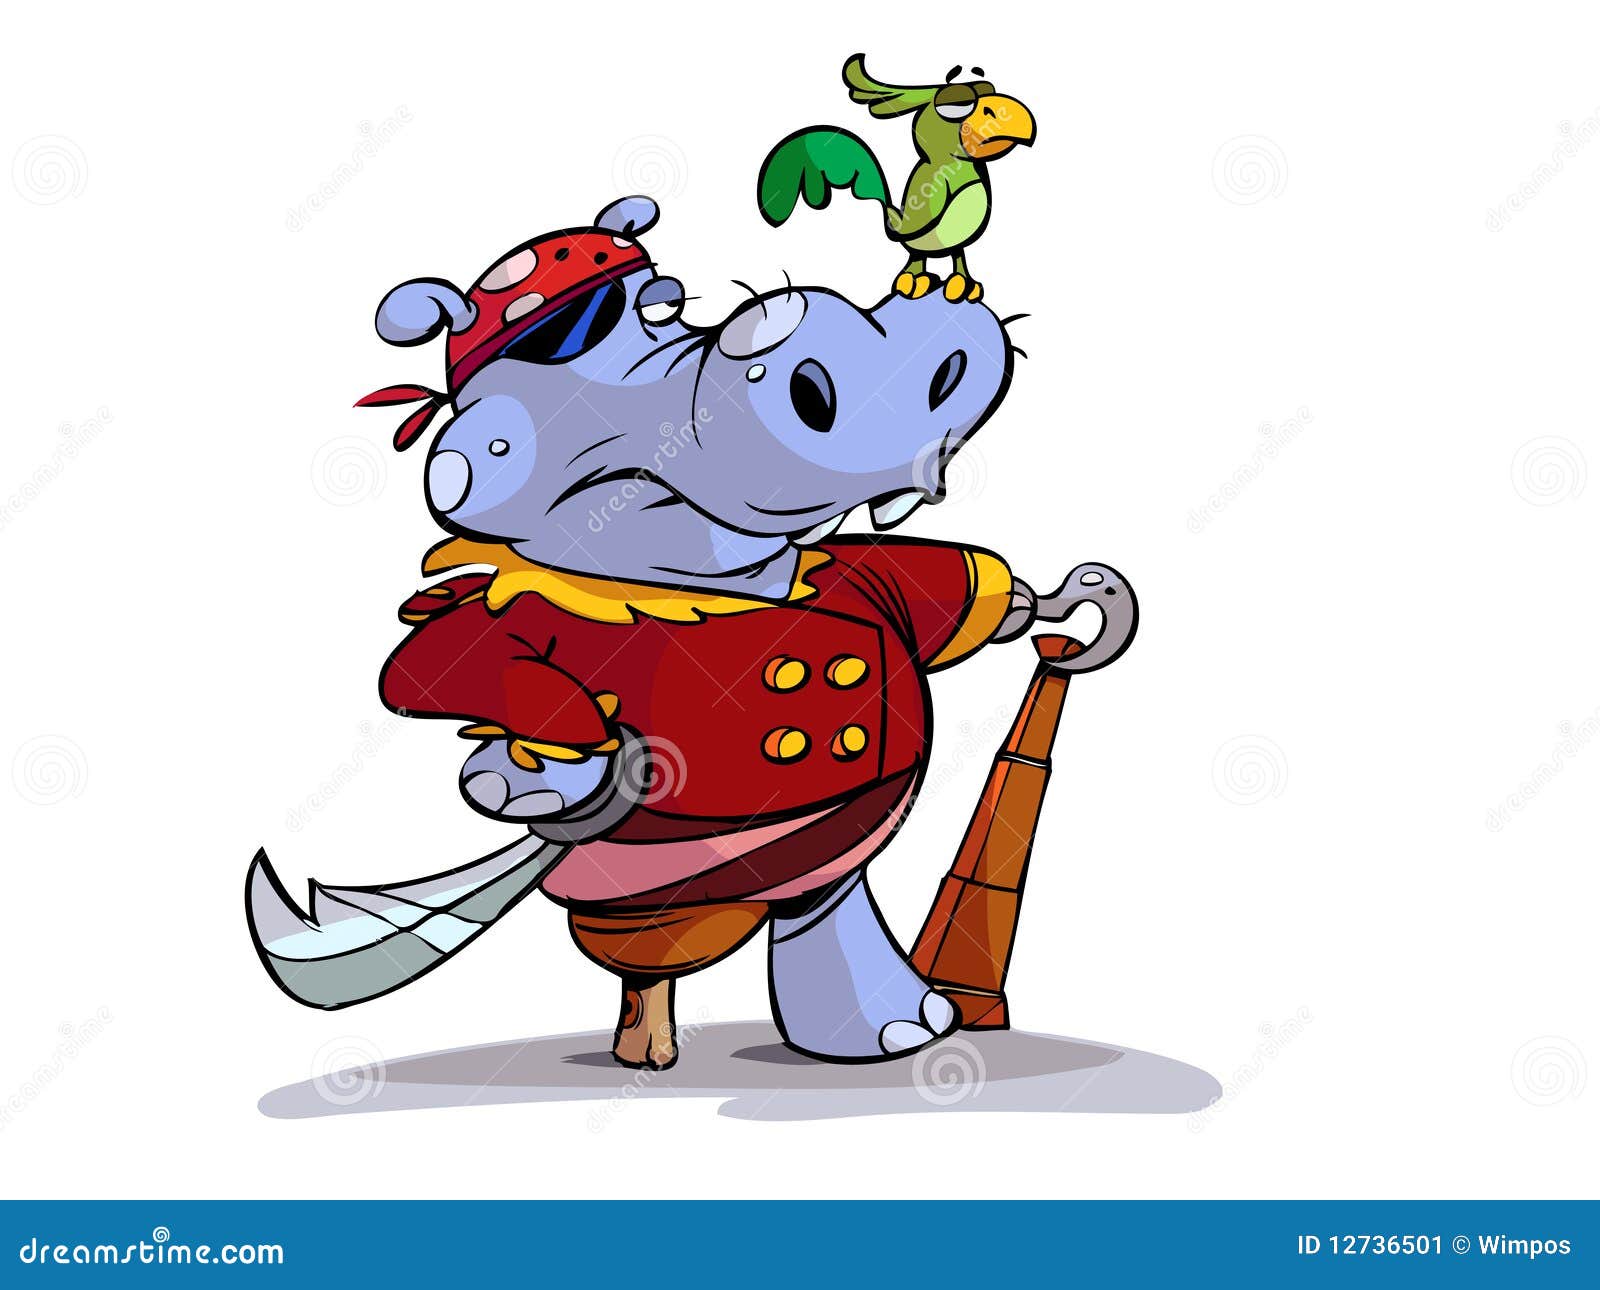 4 leg pirate enjoys hippos with banjos - Drawception